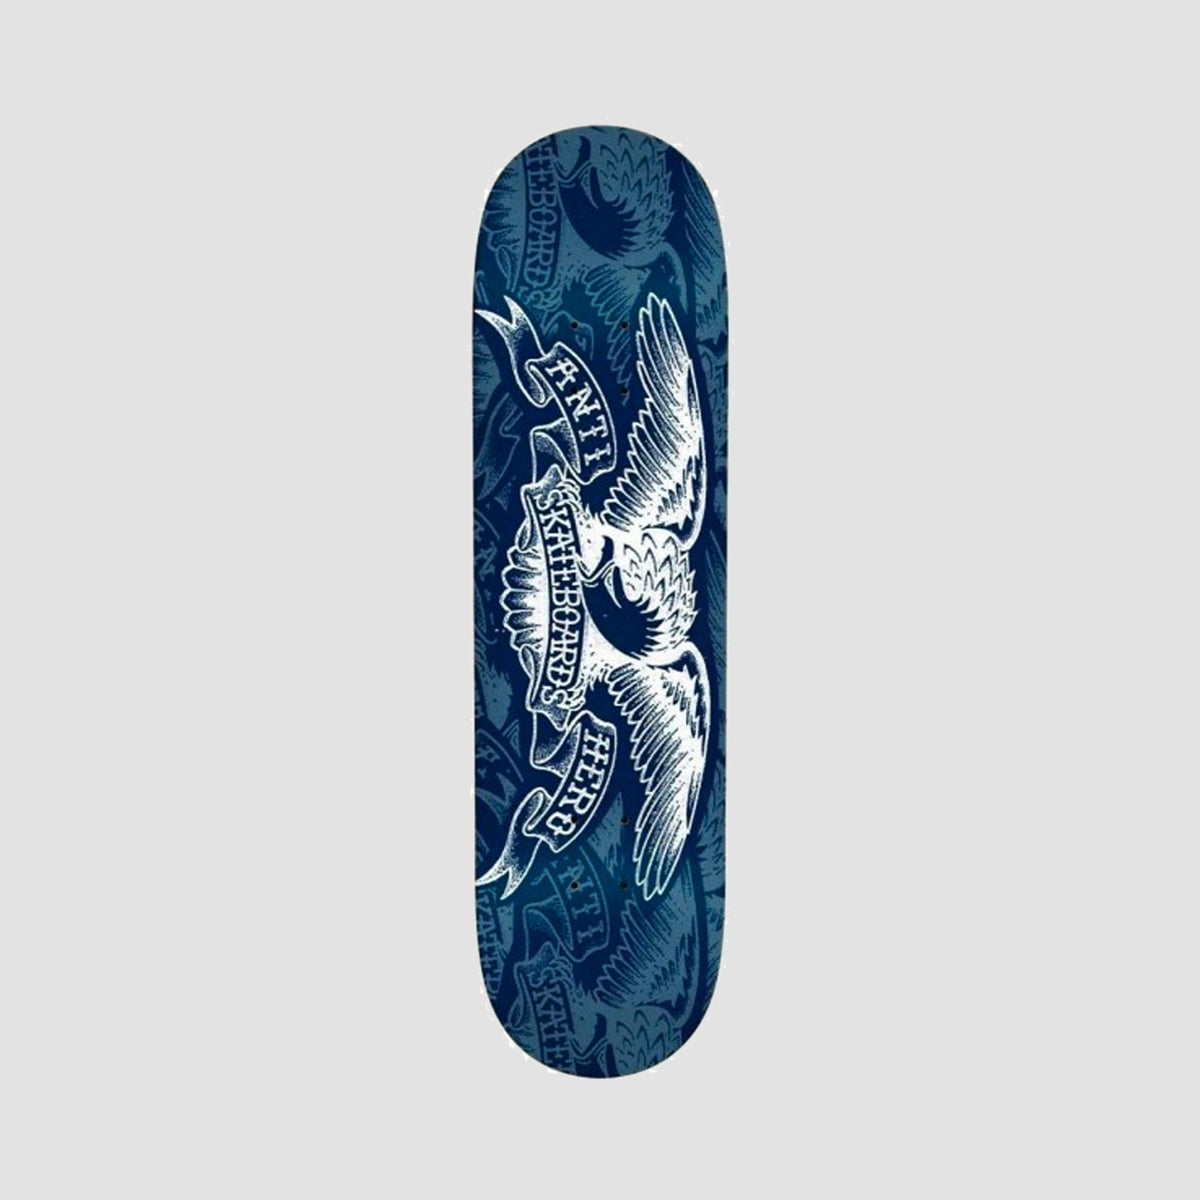 Antihero Copier Eagle Skateboard Deck Navy - 8.25"